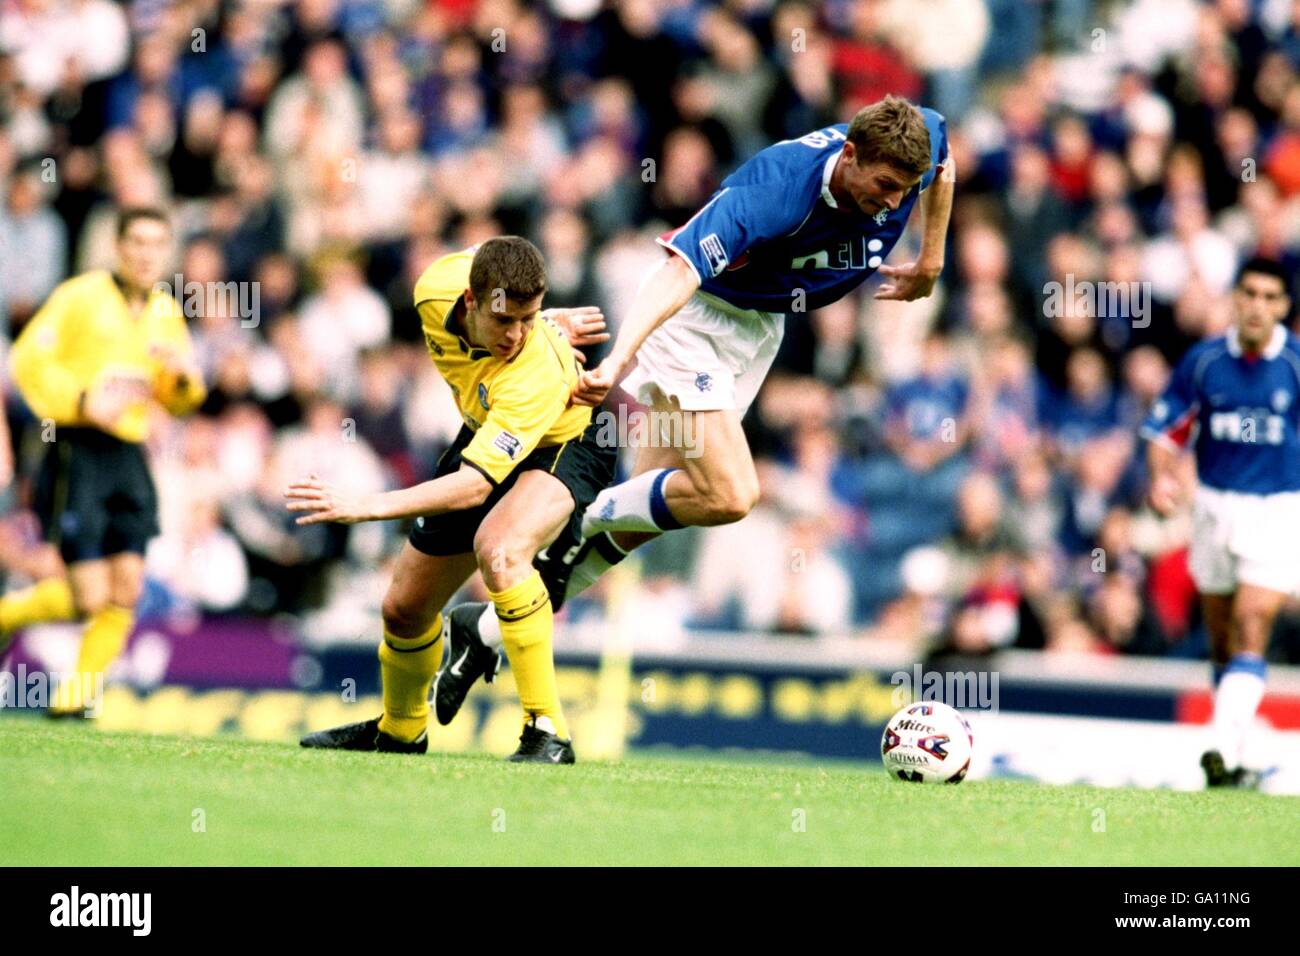 Scottish Soccer - Scottish Premiership - Rangers v Kilmarnock. Rangers' Tore Andre Flo is tripped by Kilmarnock's Chris Innes Stock Photo